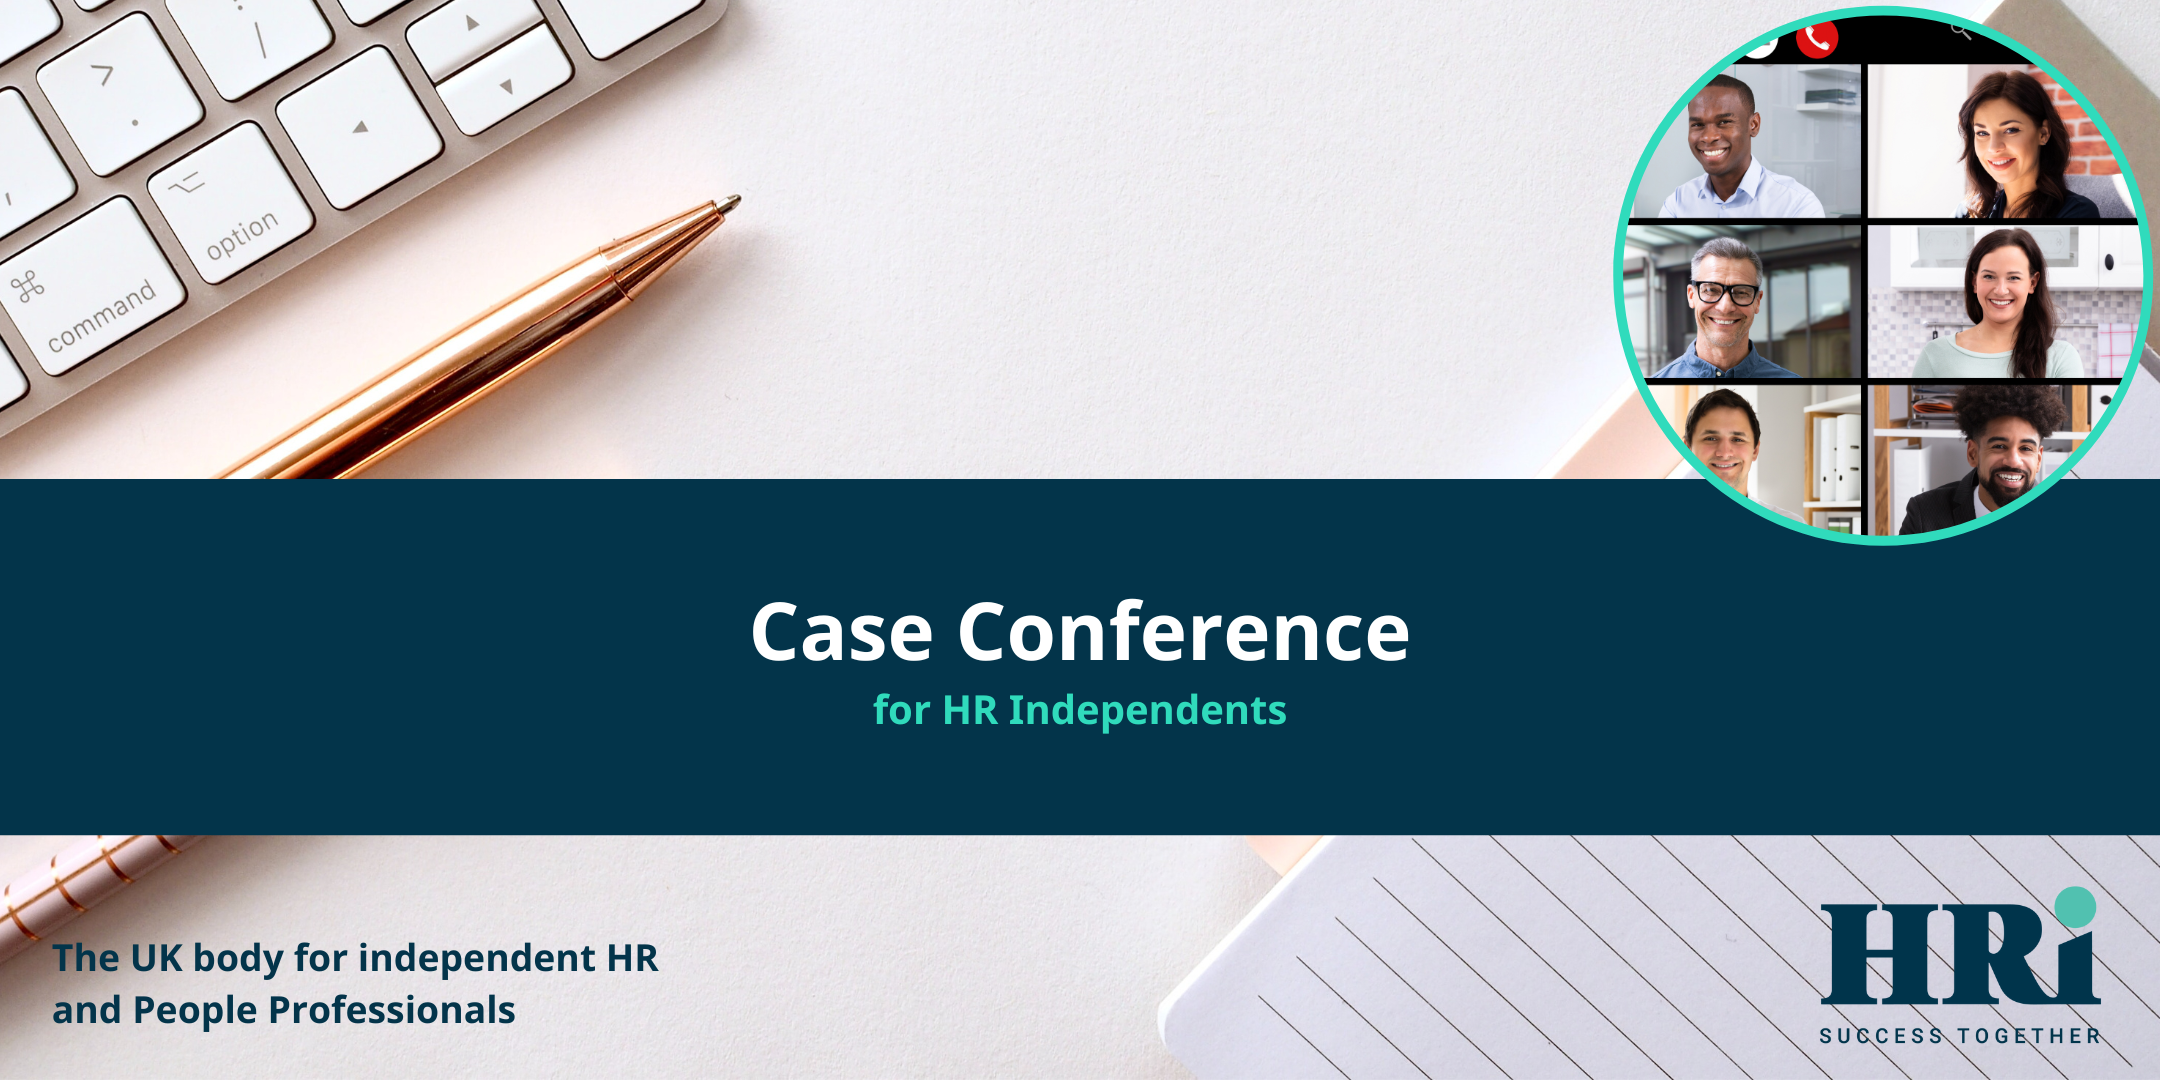 Case Conference for HR Independents